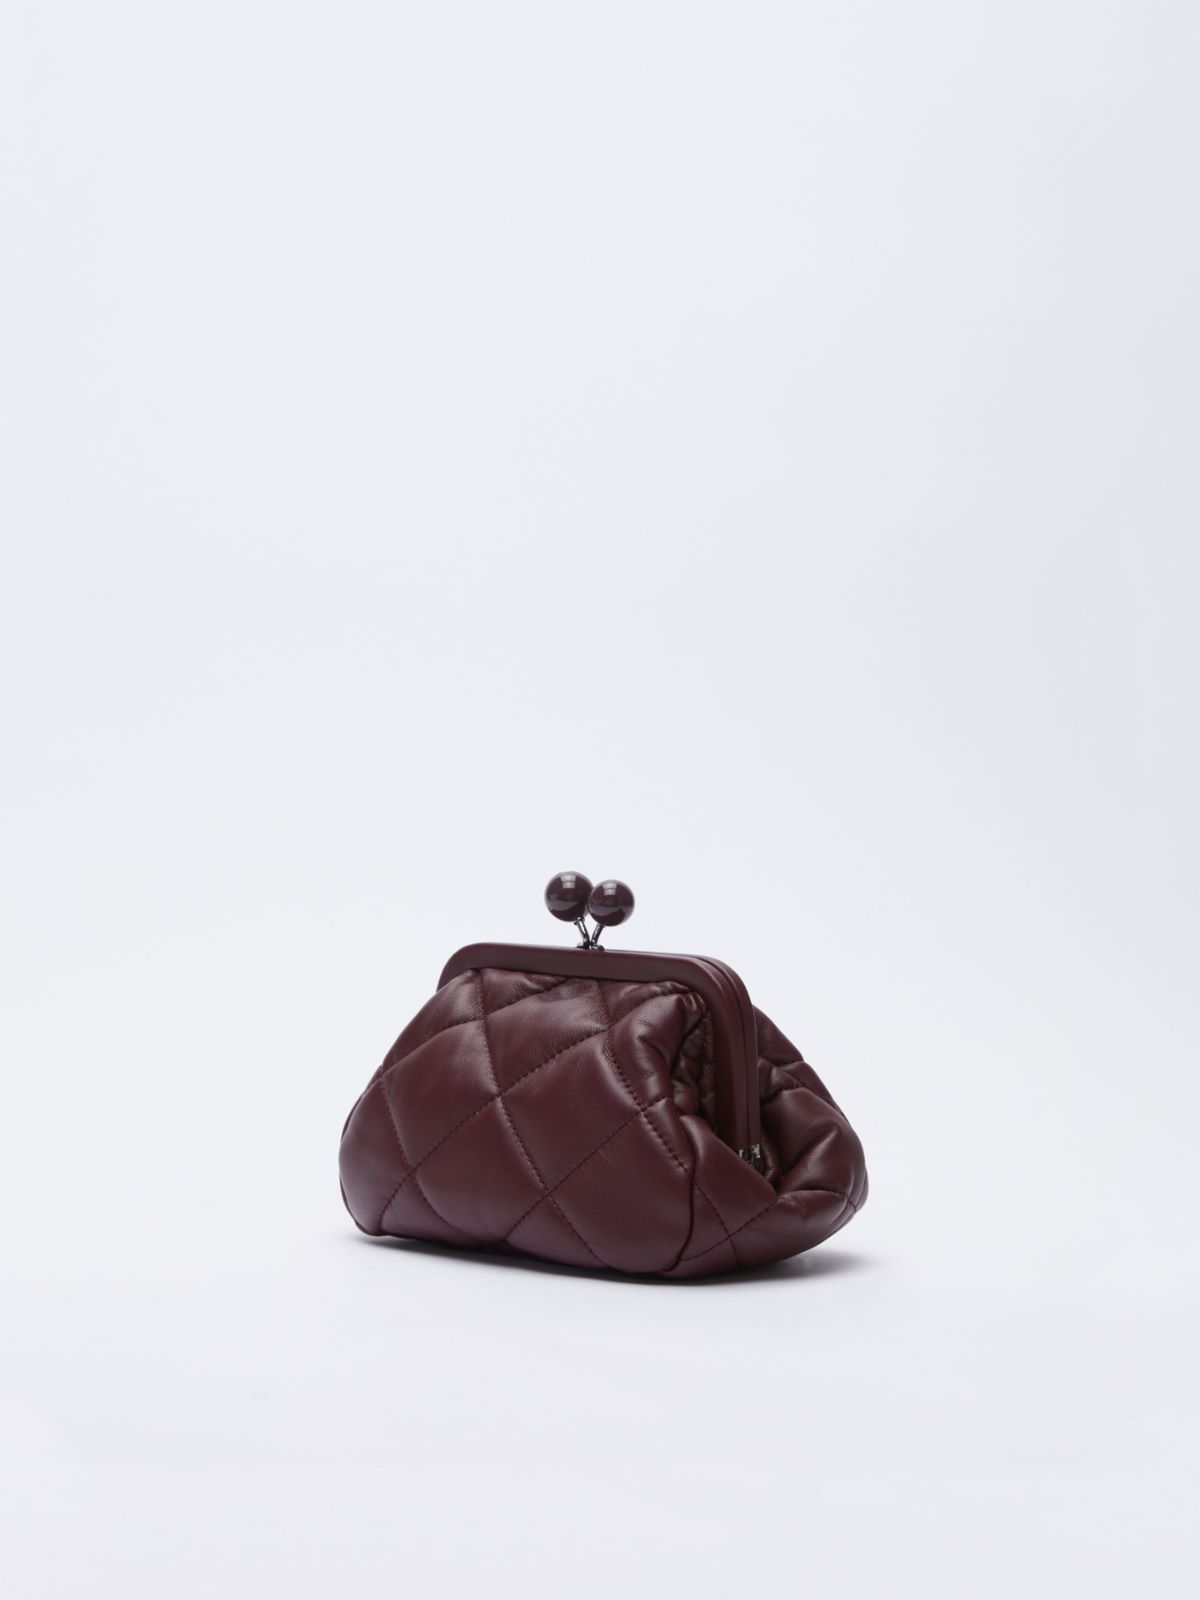 Nappa leather Pasticcino Bag - BORDEAUX - Weekend Max Mara - 2